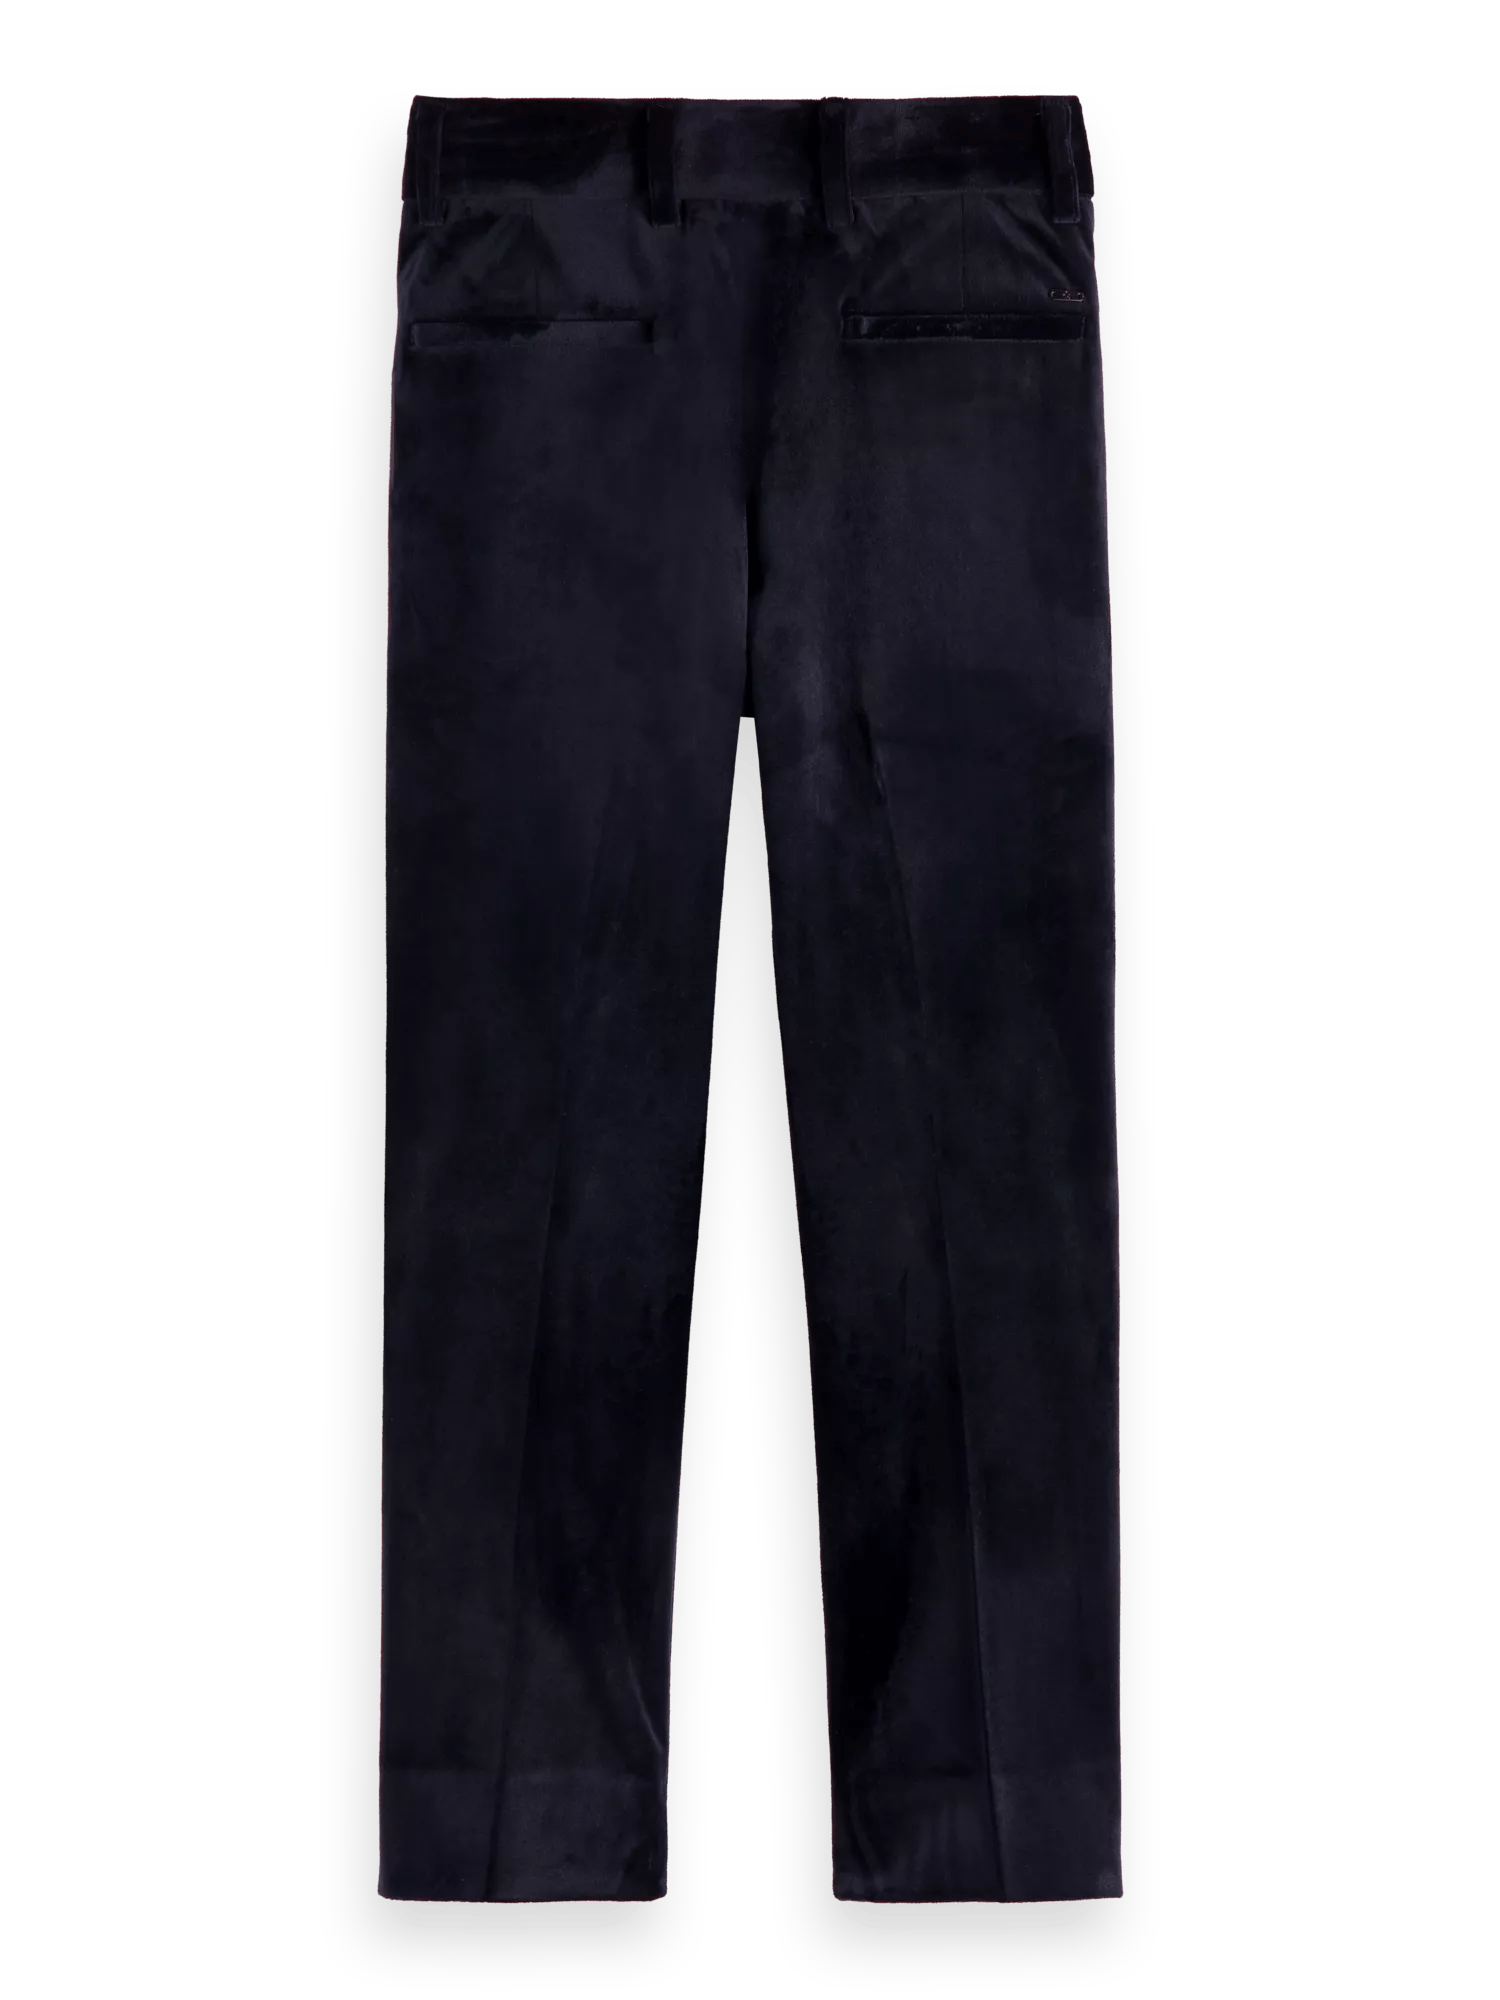 Regular Fit Velour Pants - Black - Men